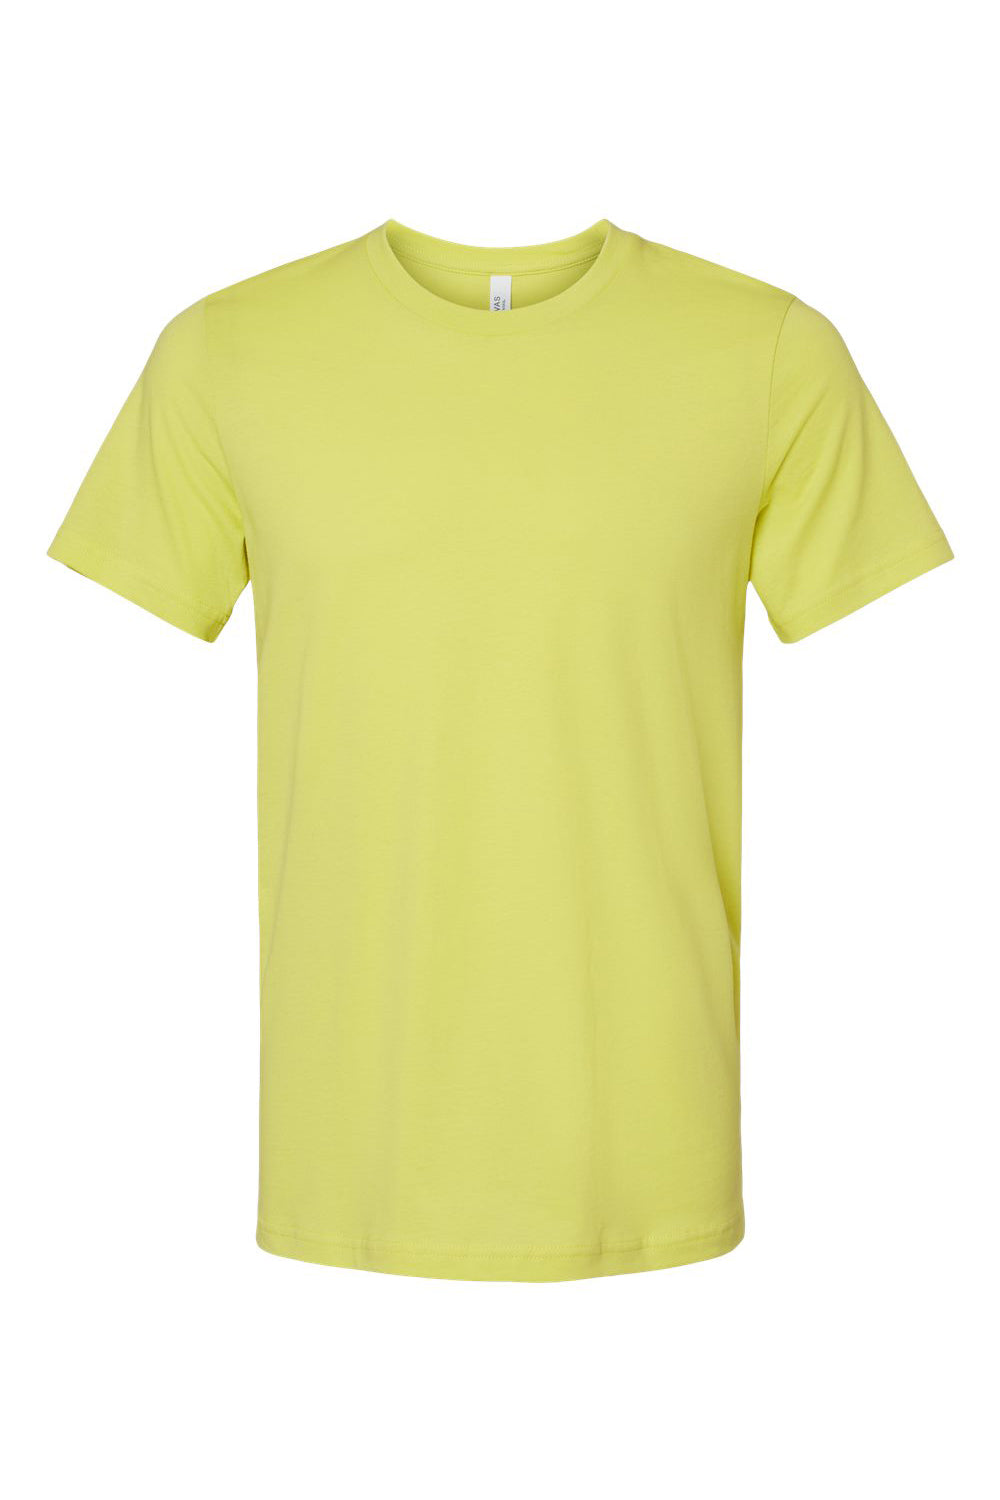 Bella + Canvas BC3001/3001C Mens Jersey Short Sleeve Crewneck T-Shirt Strobe Green Flat Front